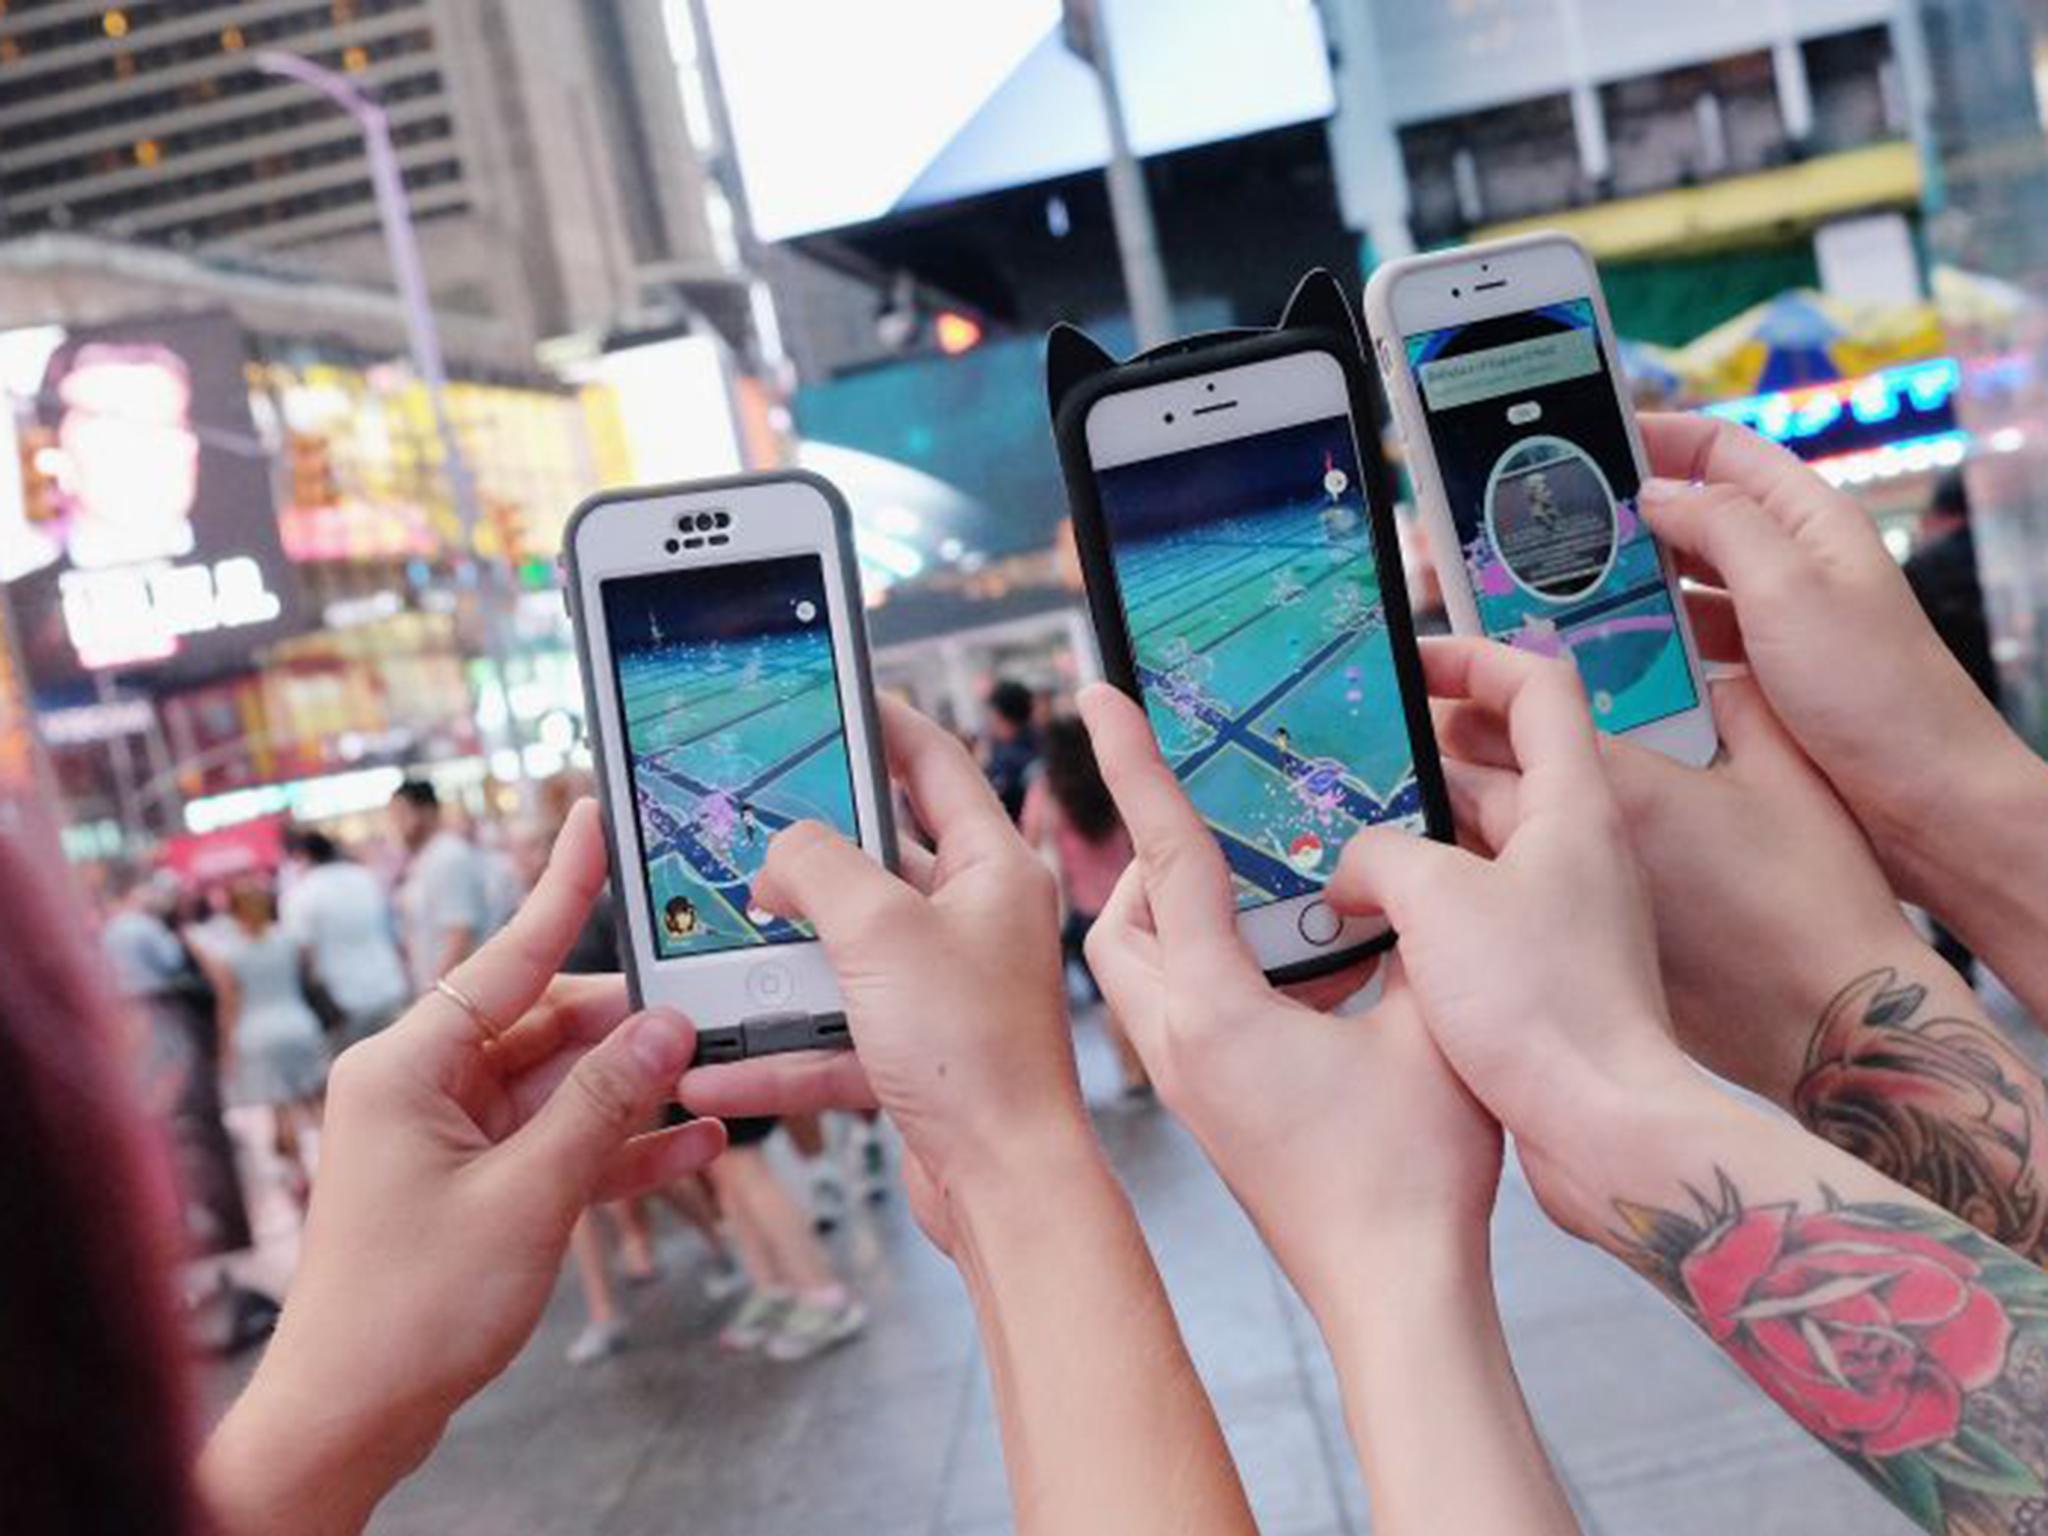 Pokémon Go has become a global phenomena since its release on July 6